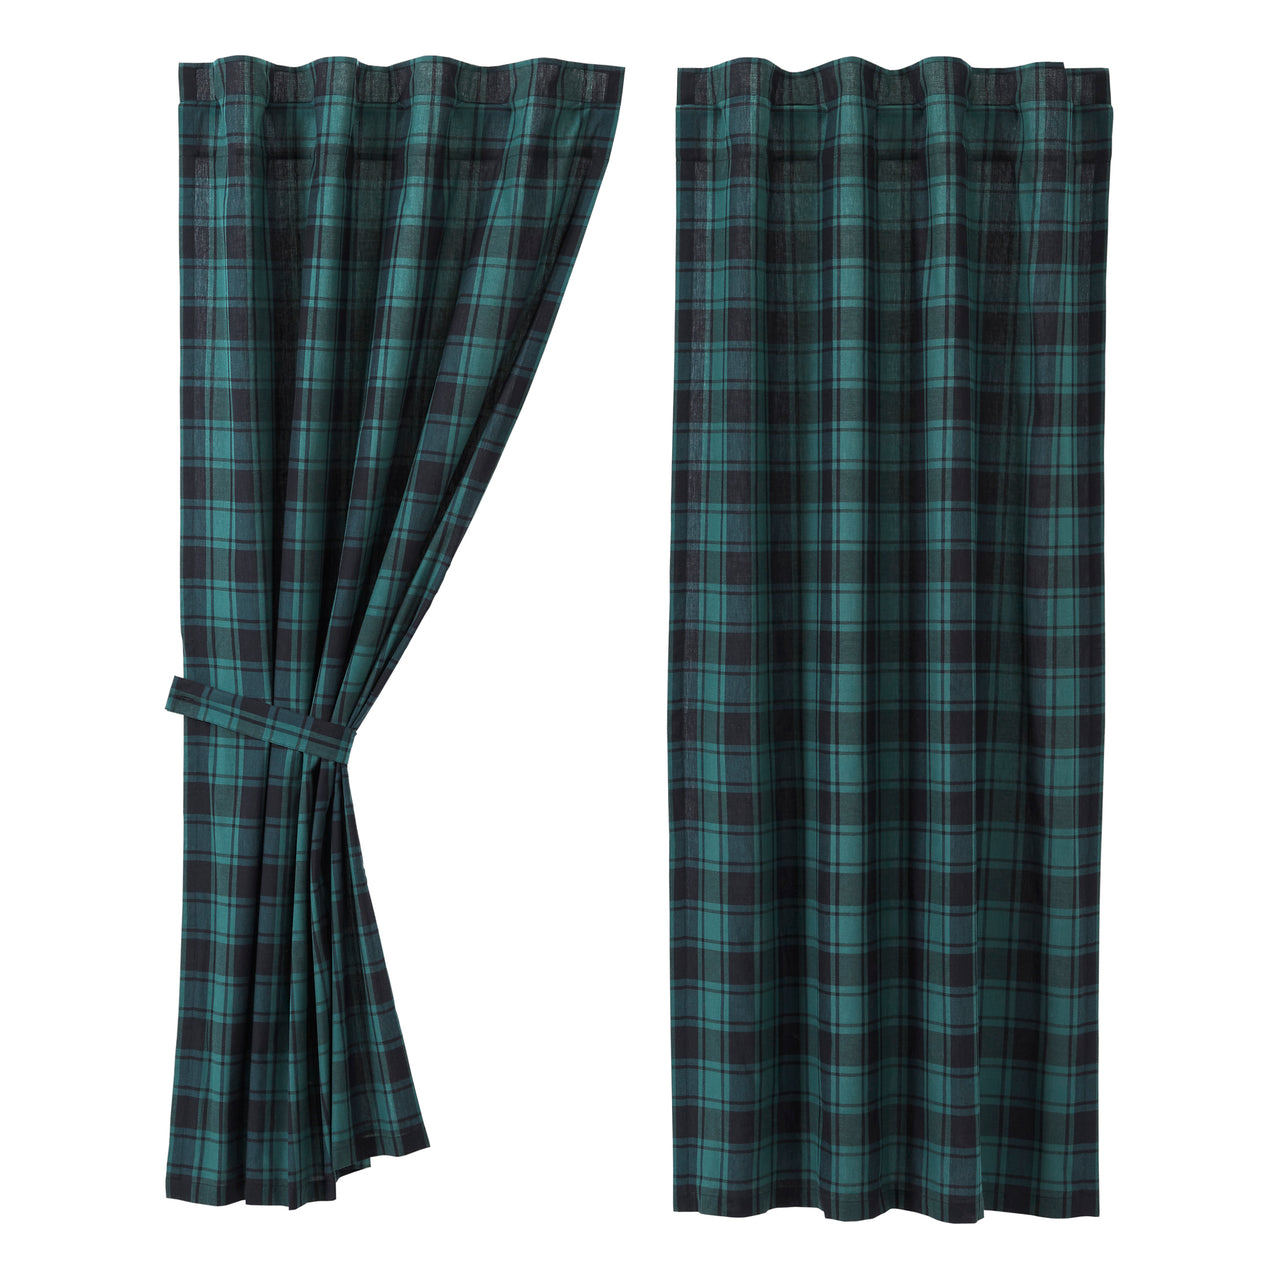 Pine Grove Short Panel Curtain Set of 2 63x36 VHC Brands